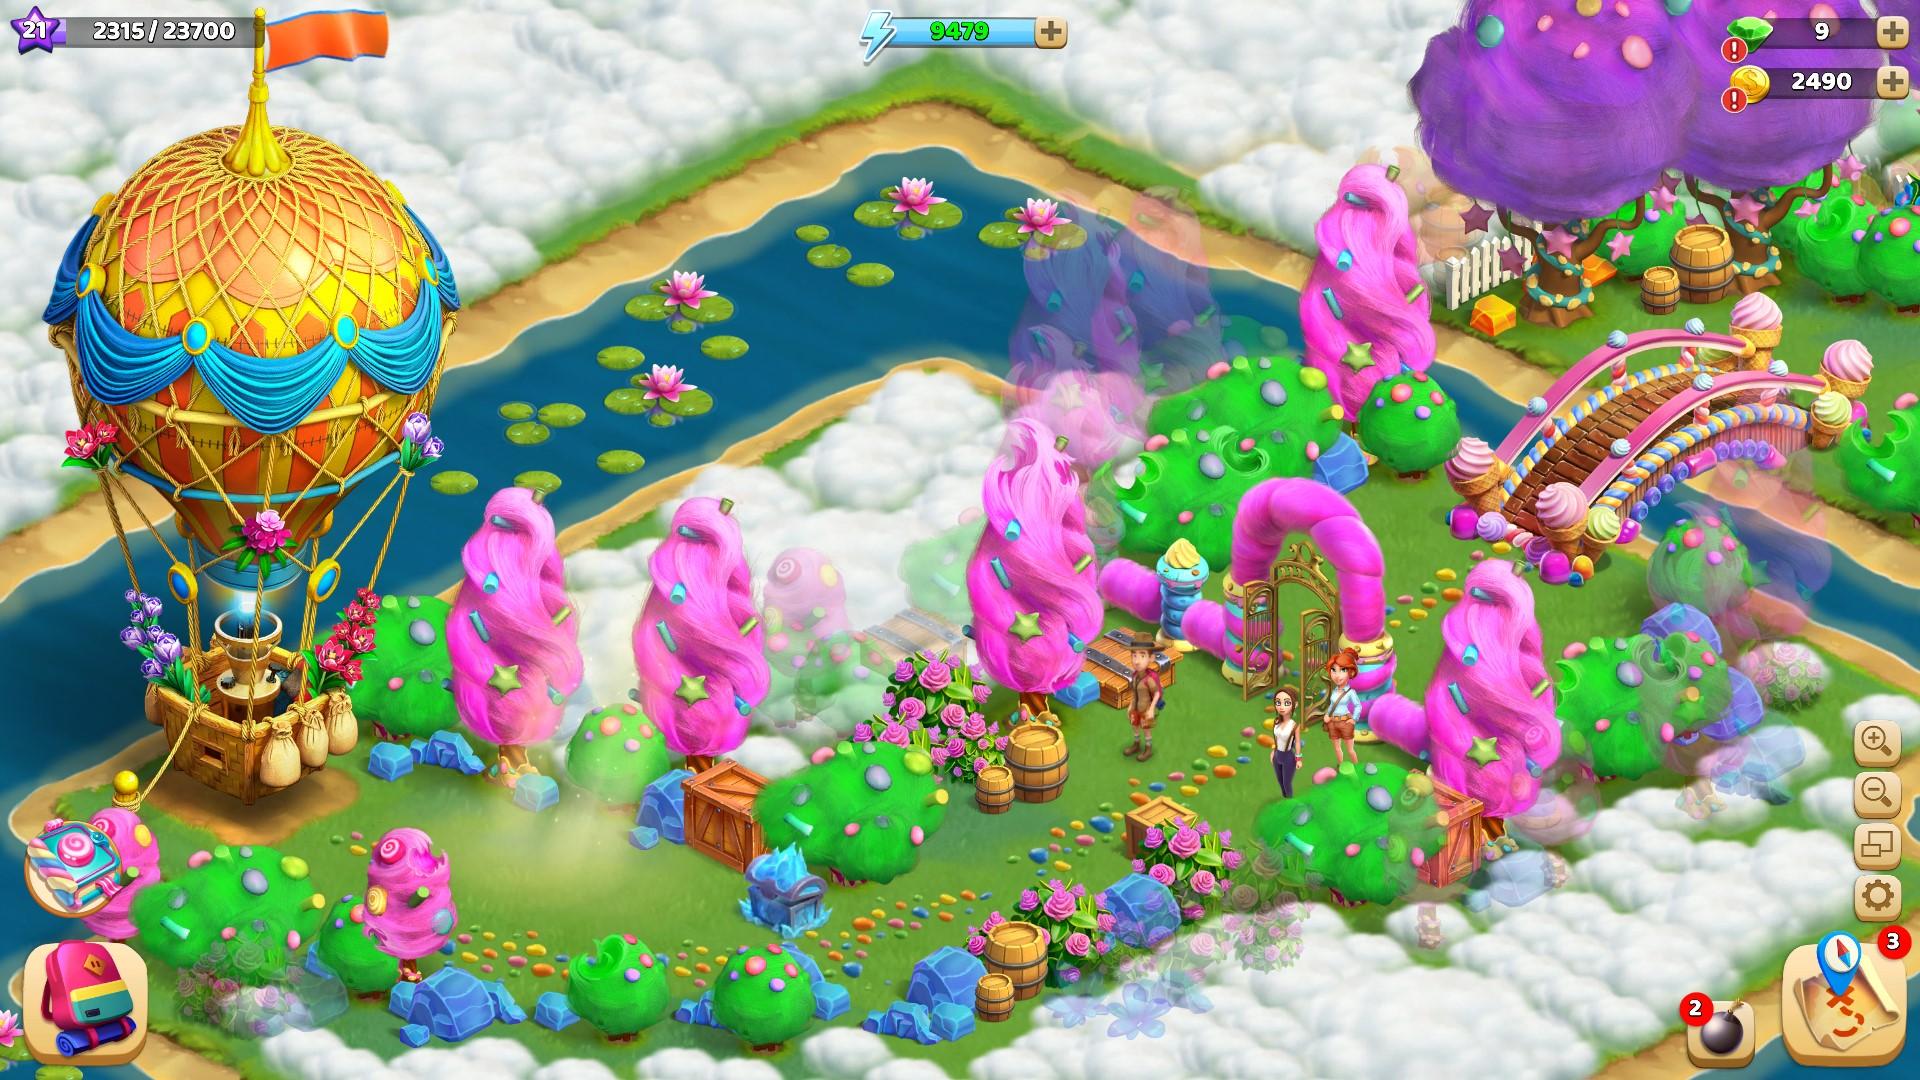 Funky Bay Farm & Adventure game 42.0.33 Screenshot 22